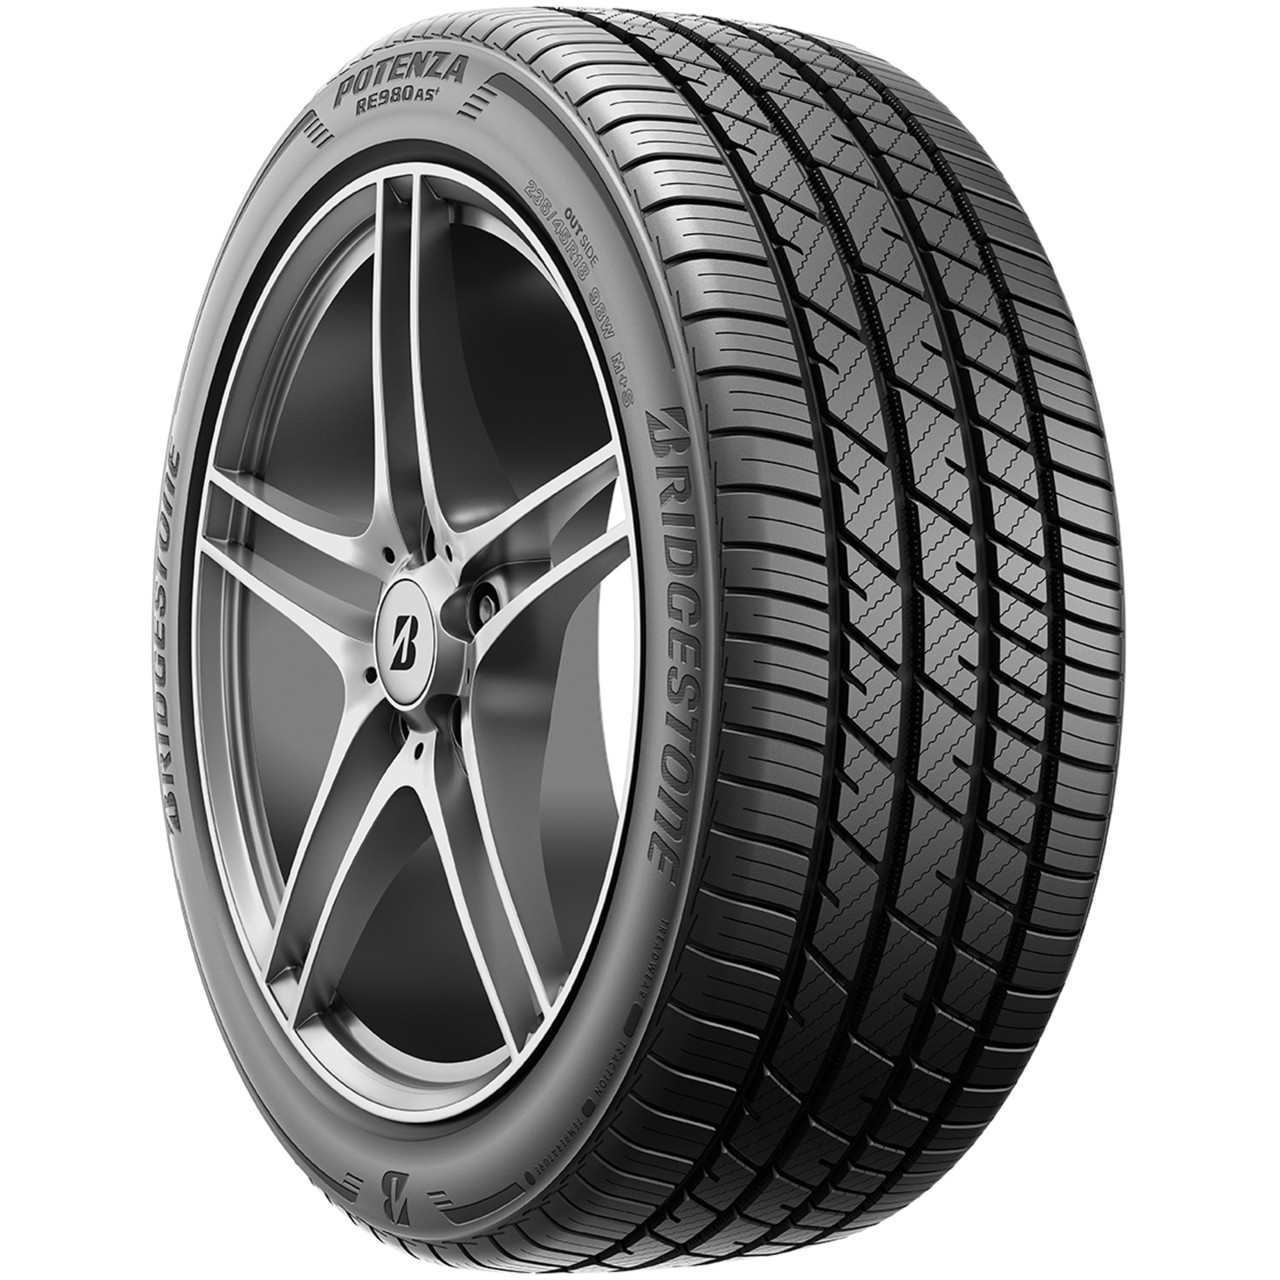 Bridgestone Potenza RE980AS+ Tire 215/55R17 94W 500AAA BW